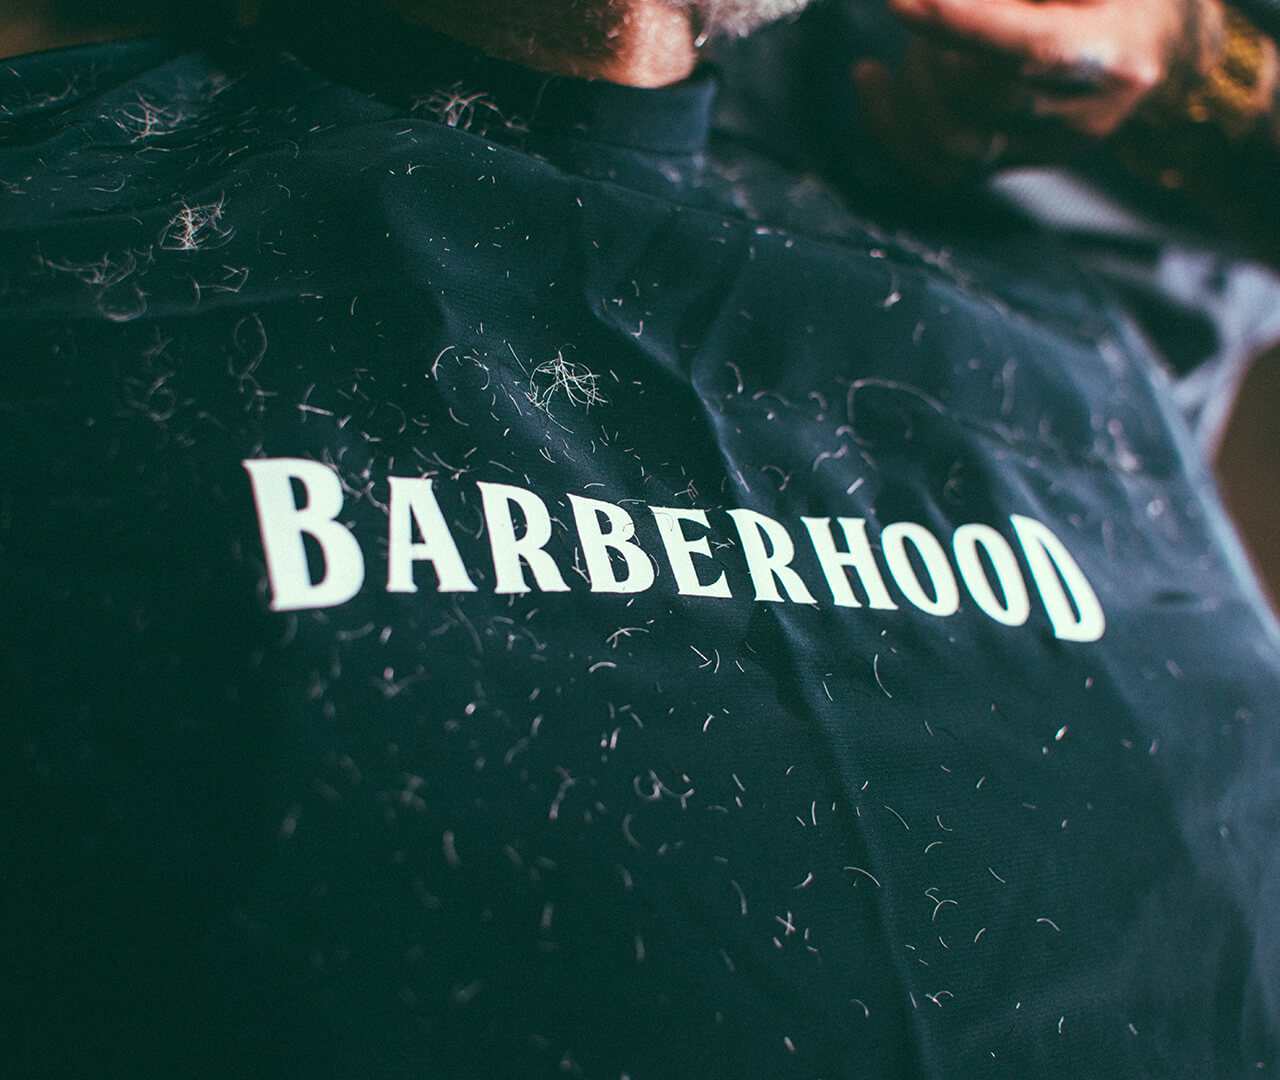 A História da Barberhood